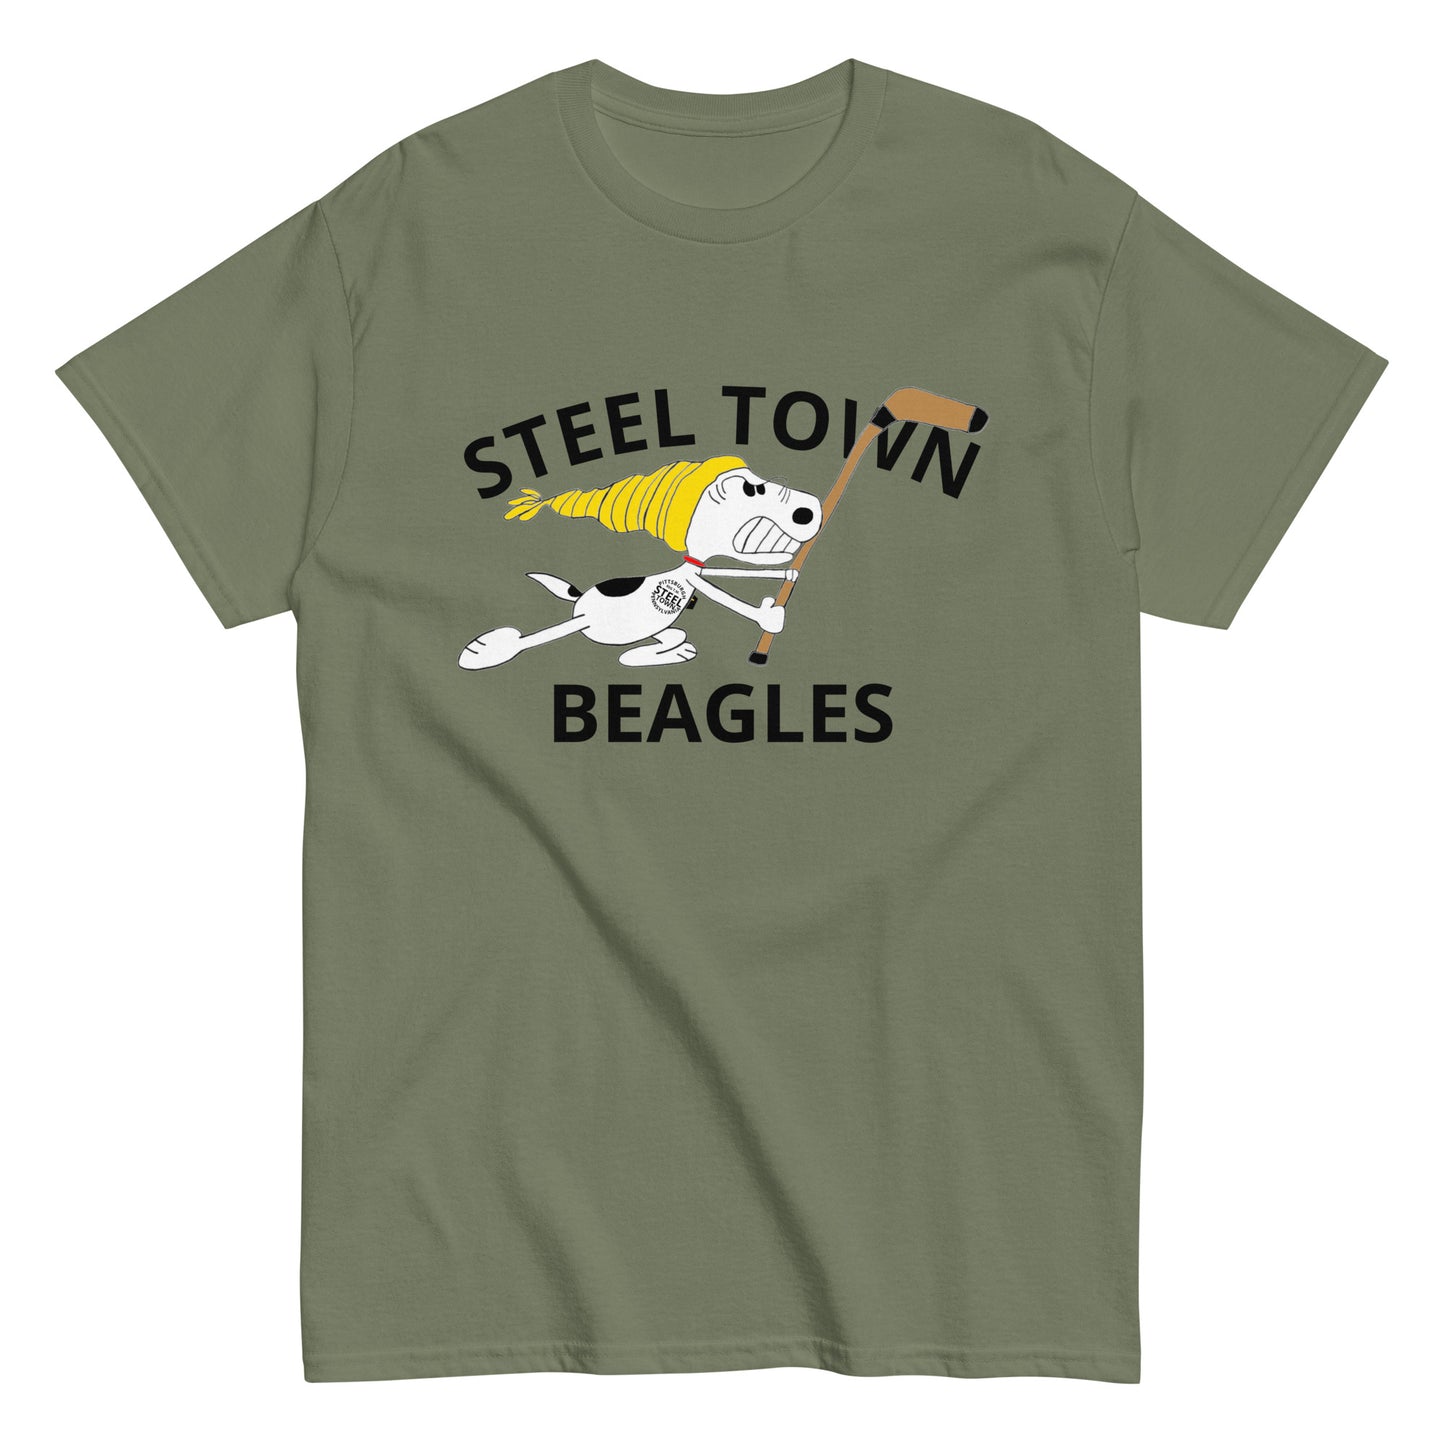 STEEL TOWN BEAGLES